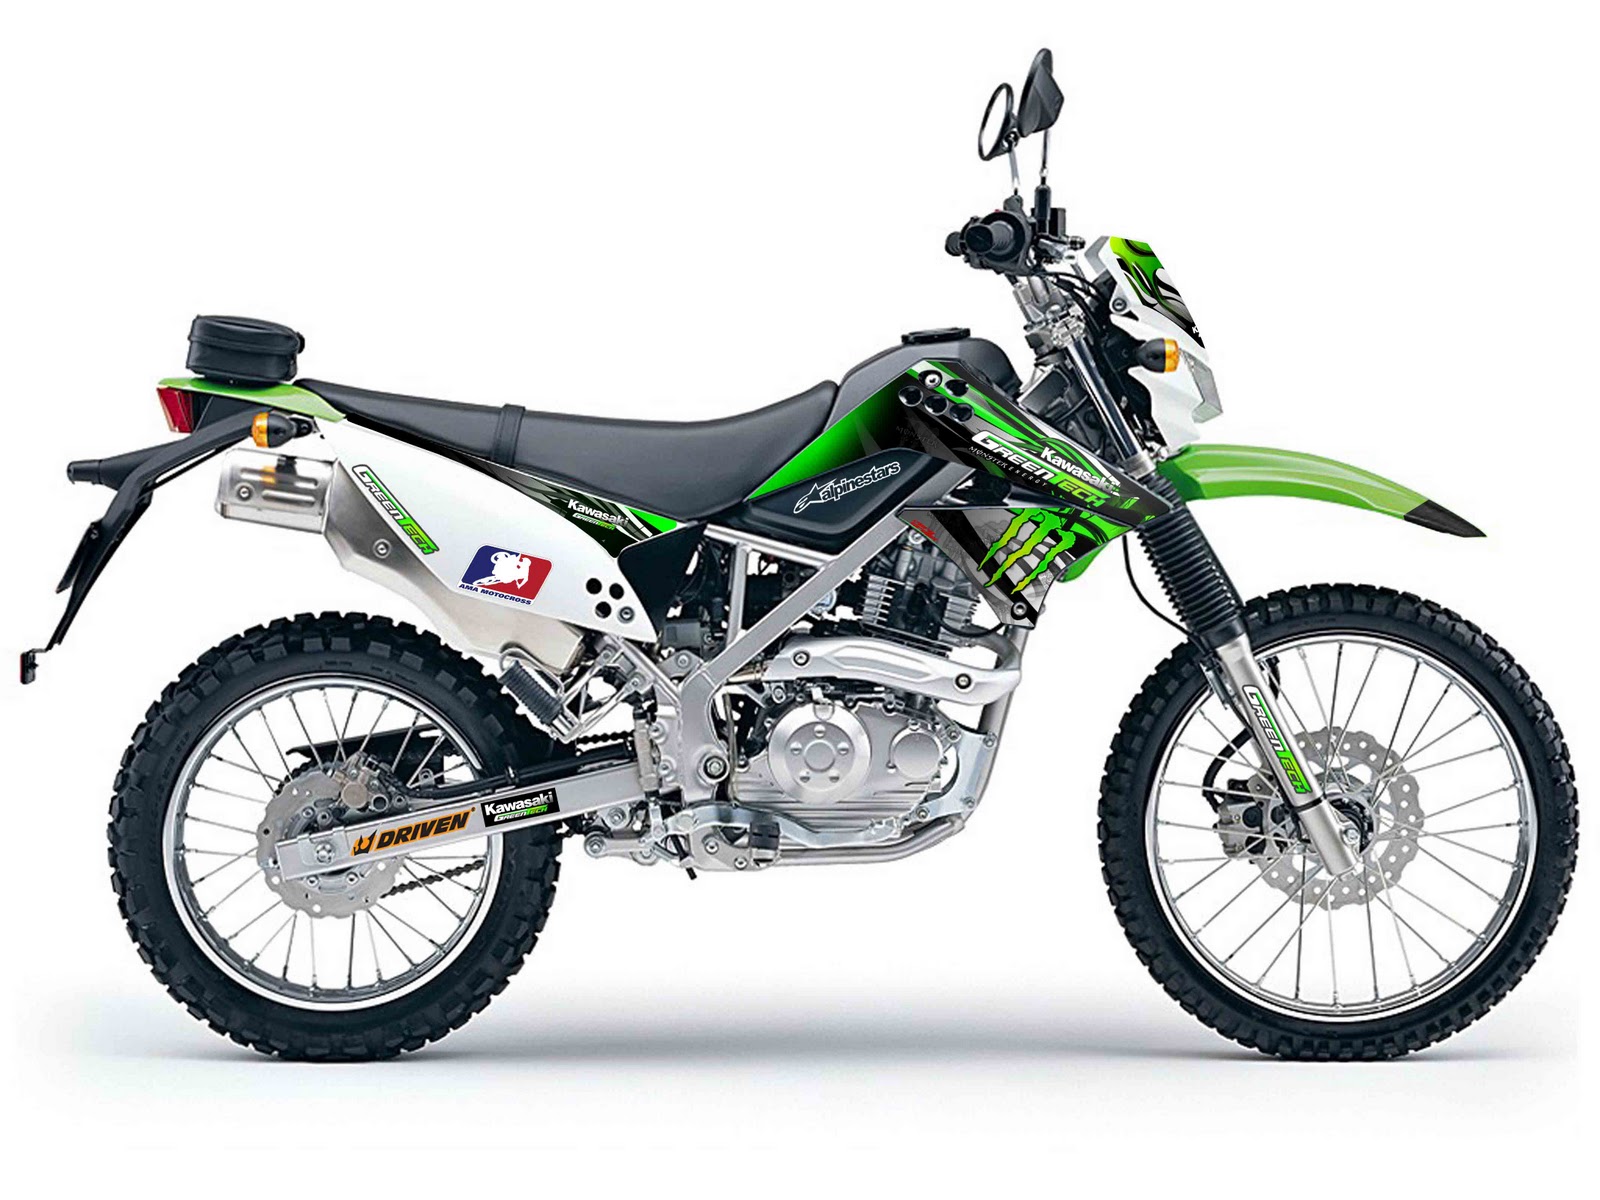 Motor Kawasaki Ninja KLX 150S Spesifikasi